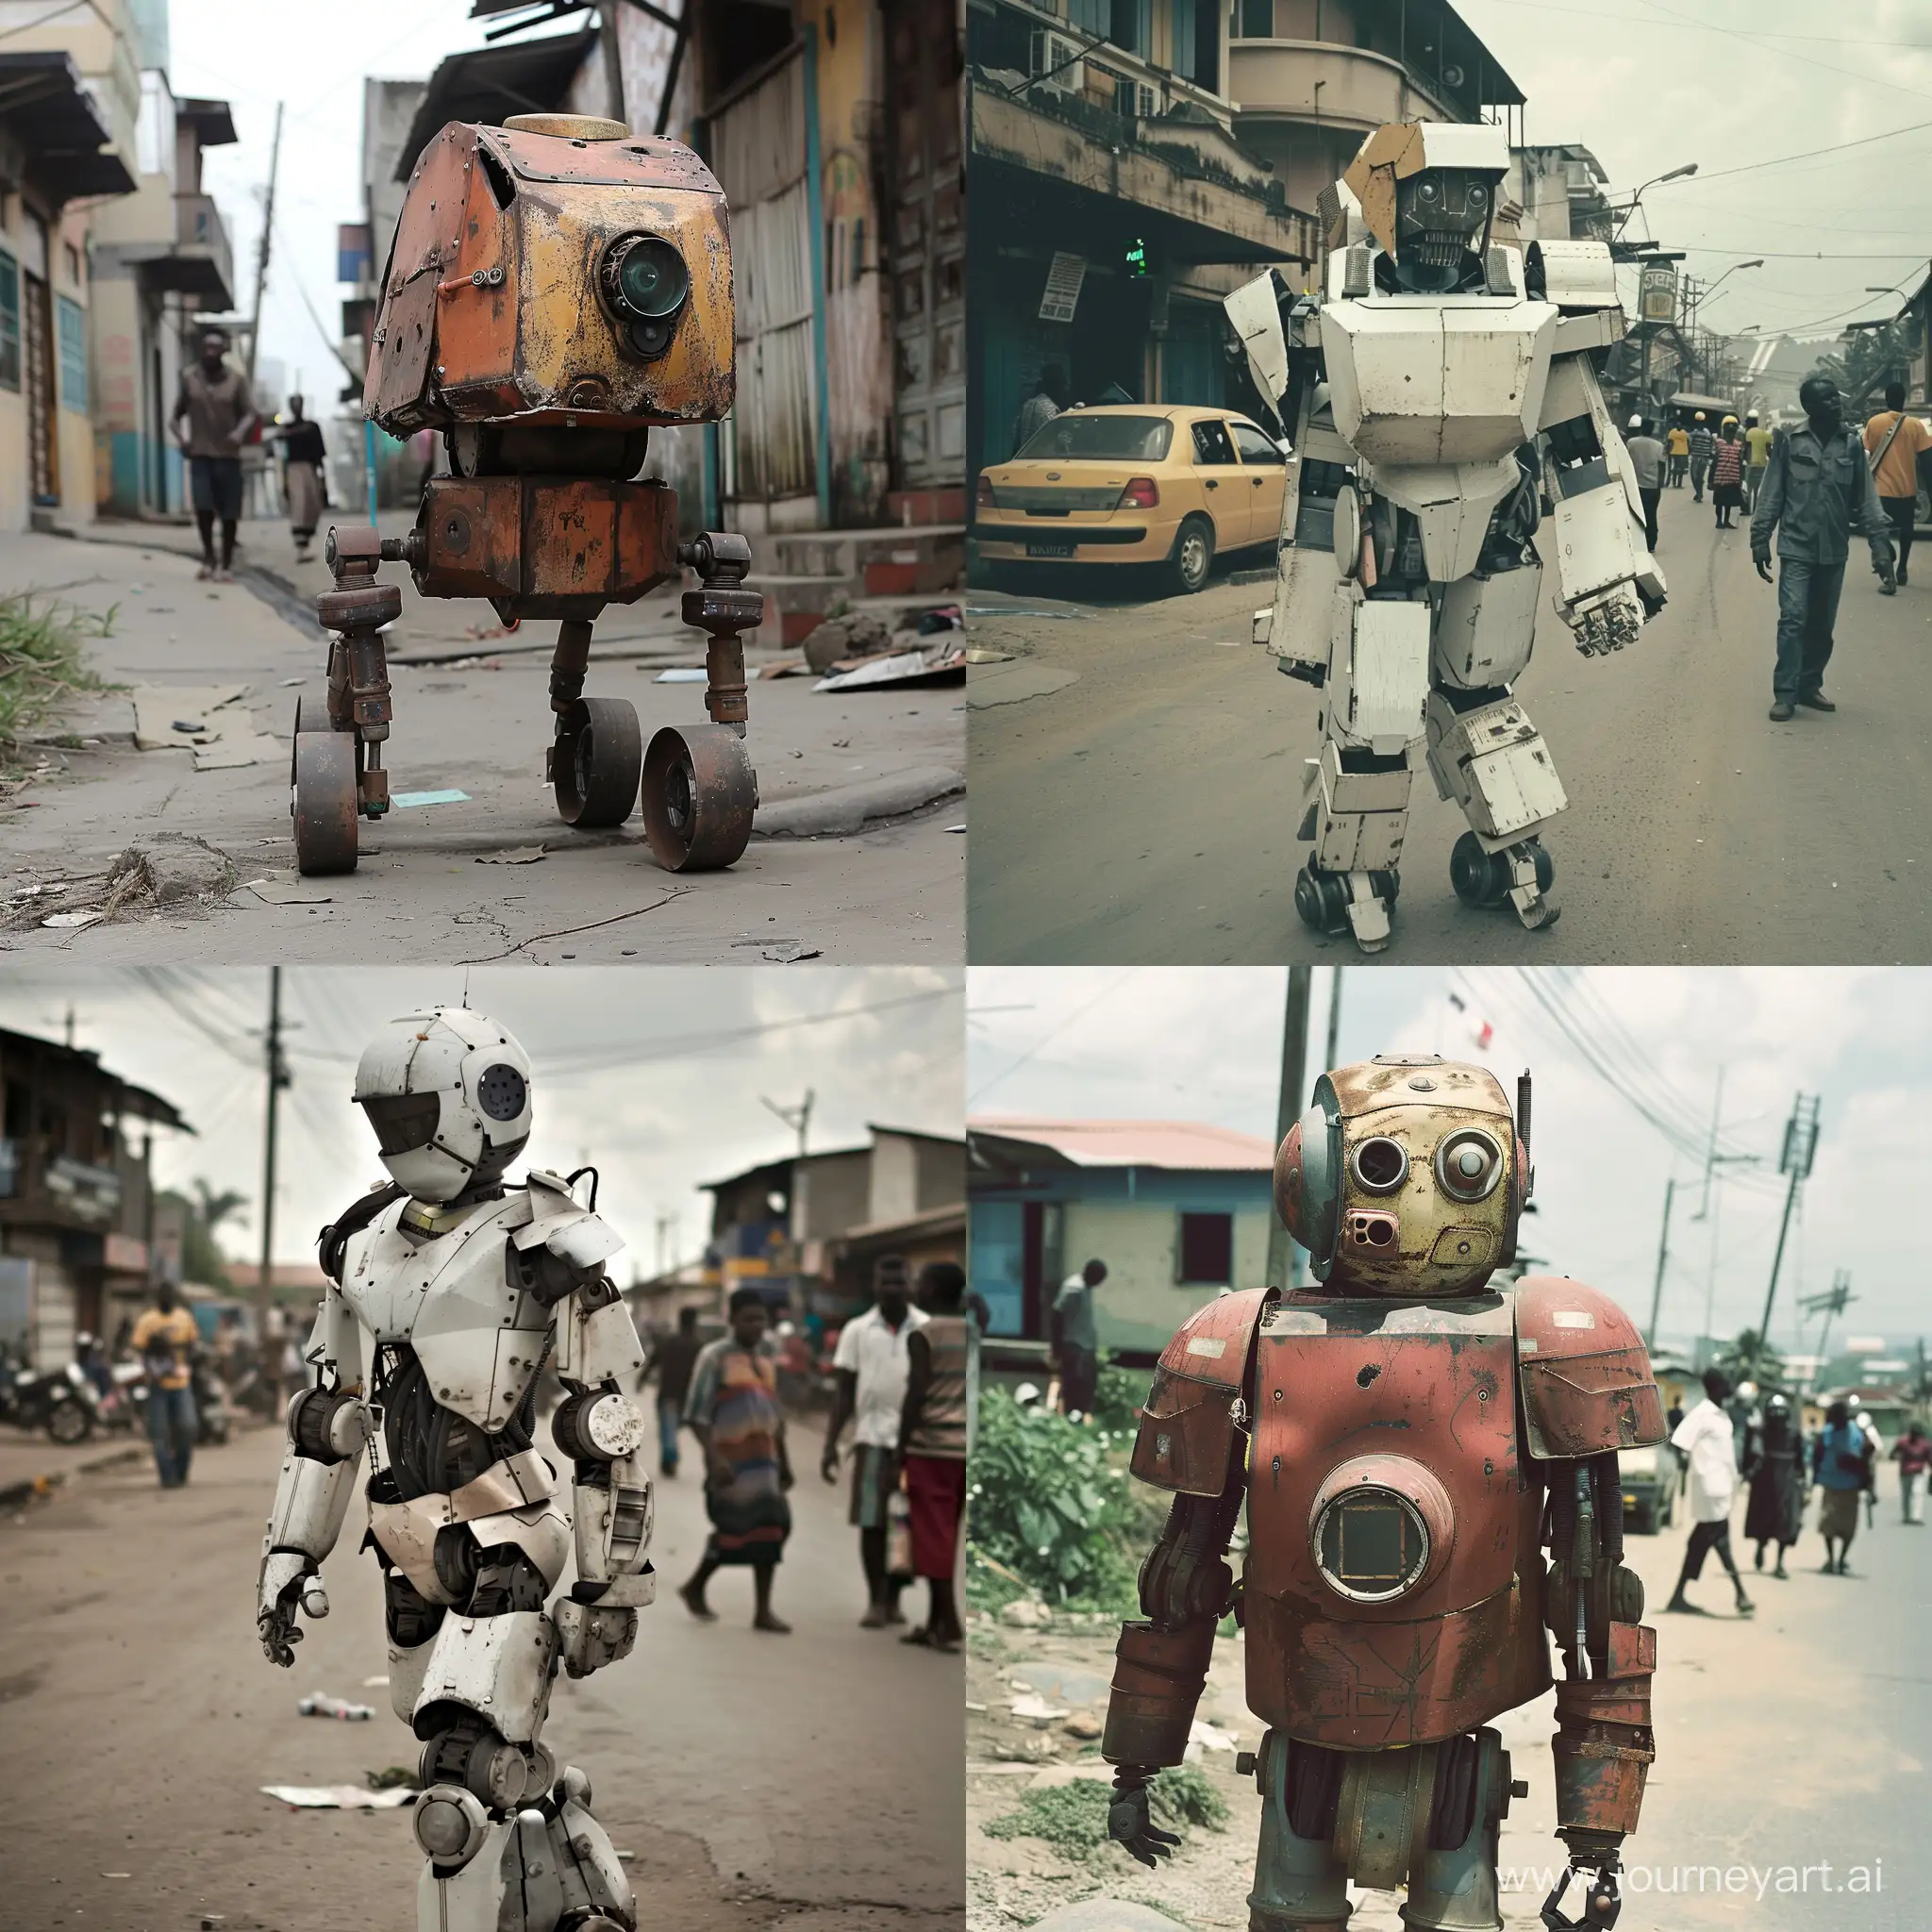 Futuristic-Robot-Roaming-the-Vibrant-Streets-of-Kinshasa